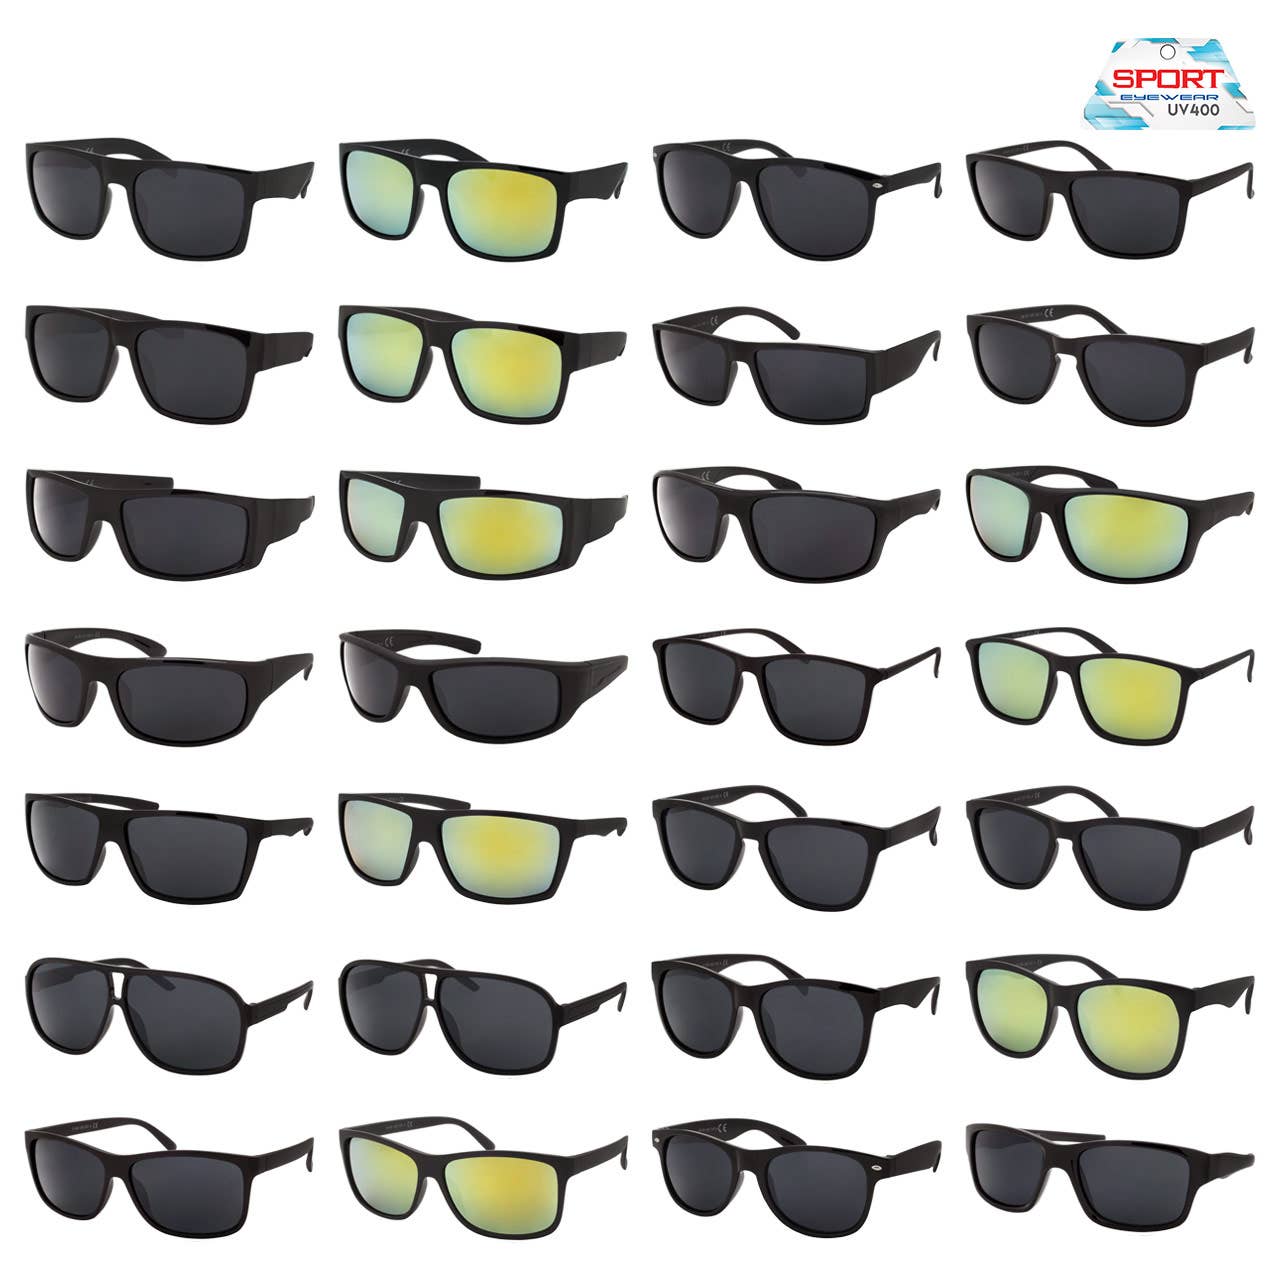 Shark Eyes, Inc - Mens Sport Sunglasses 36 Pcs per Case Assorted Styles Bulk